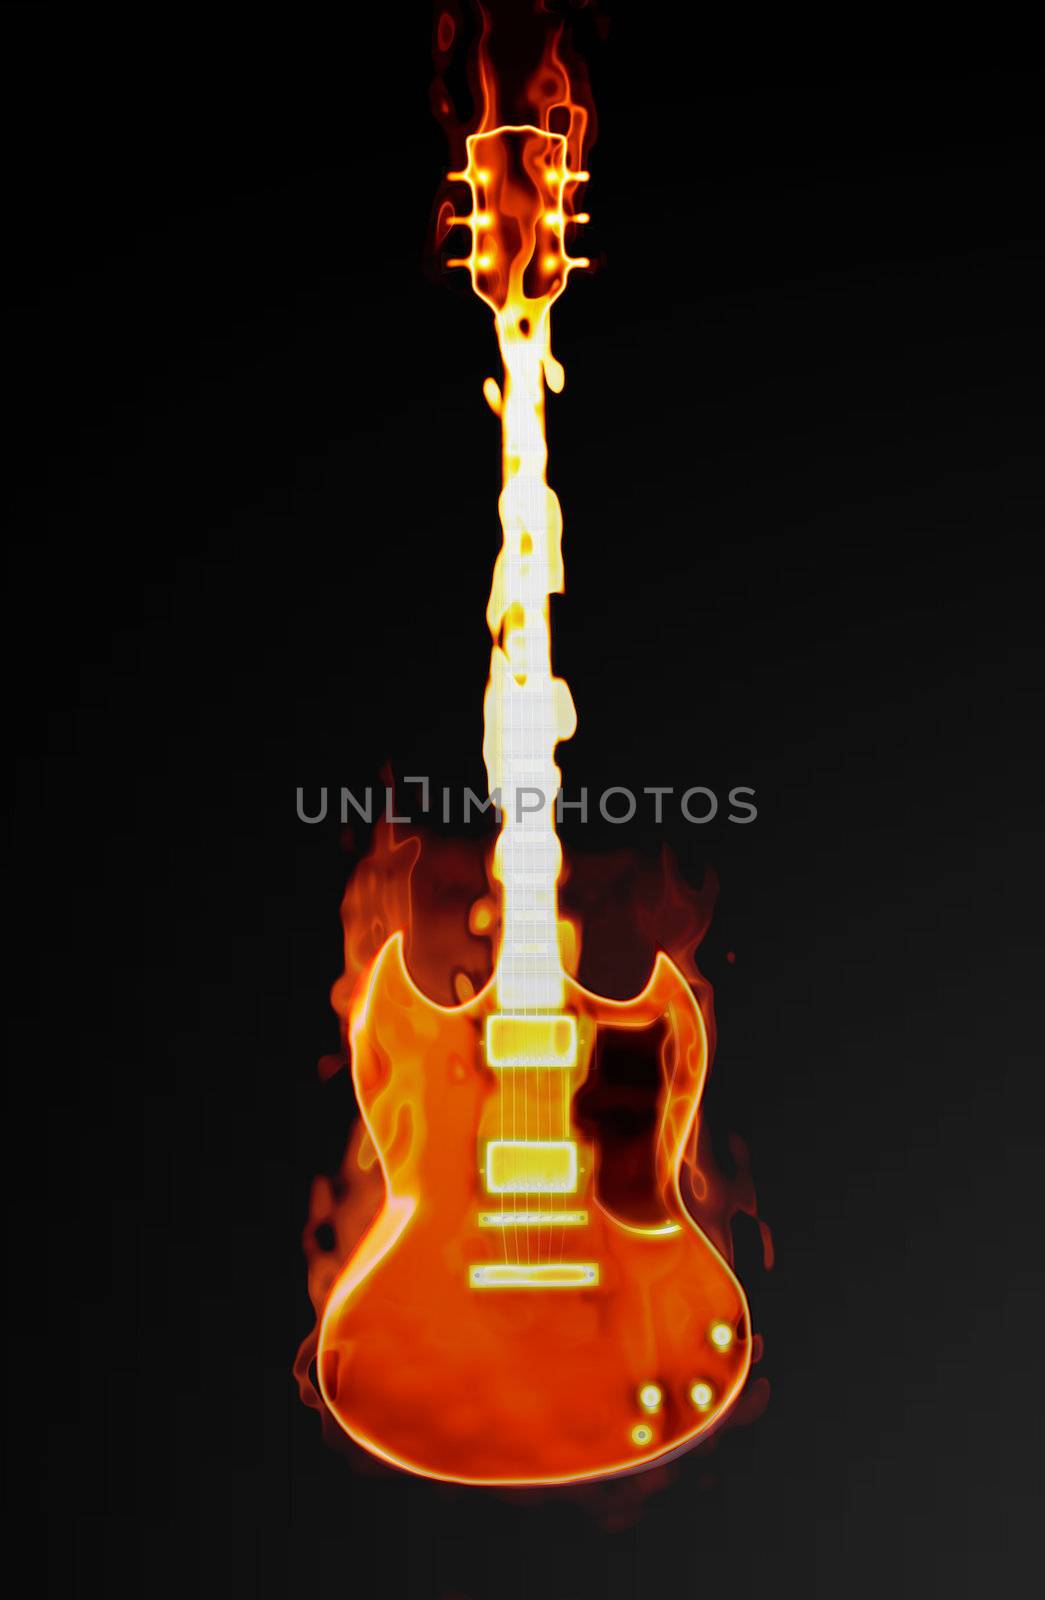 Flaming Guitar by kentoh